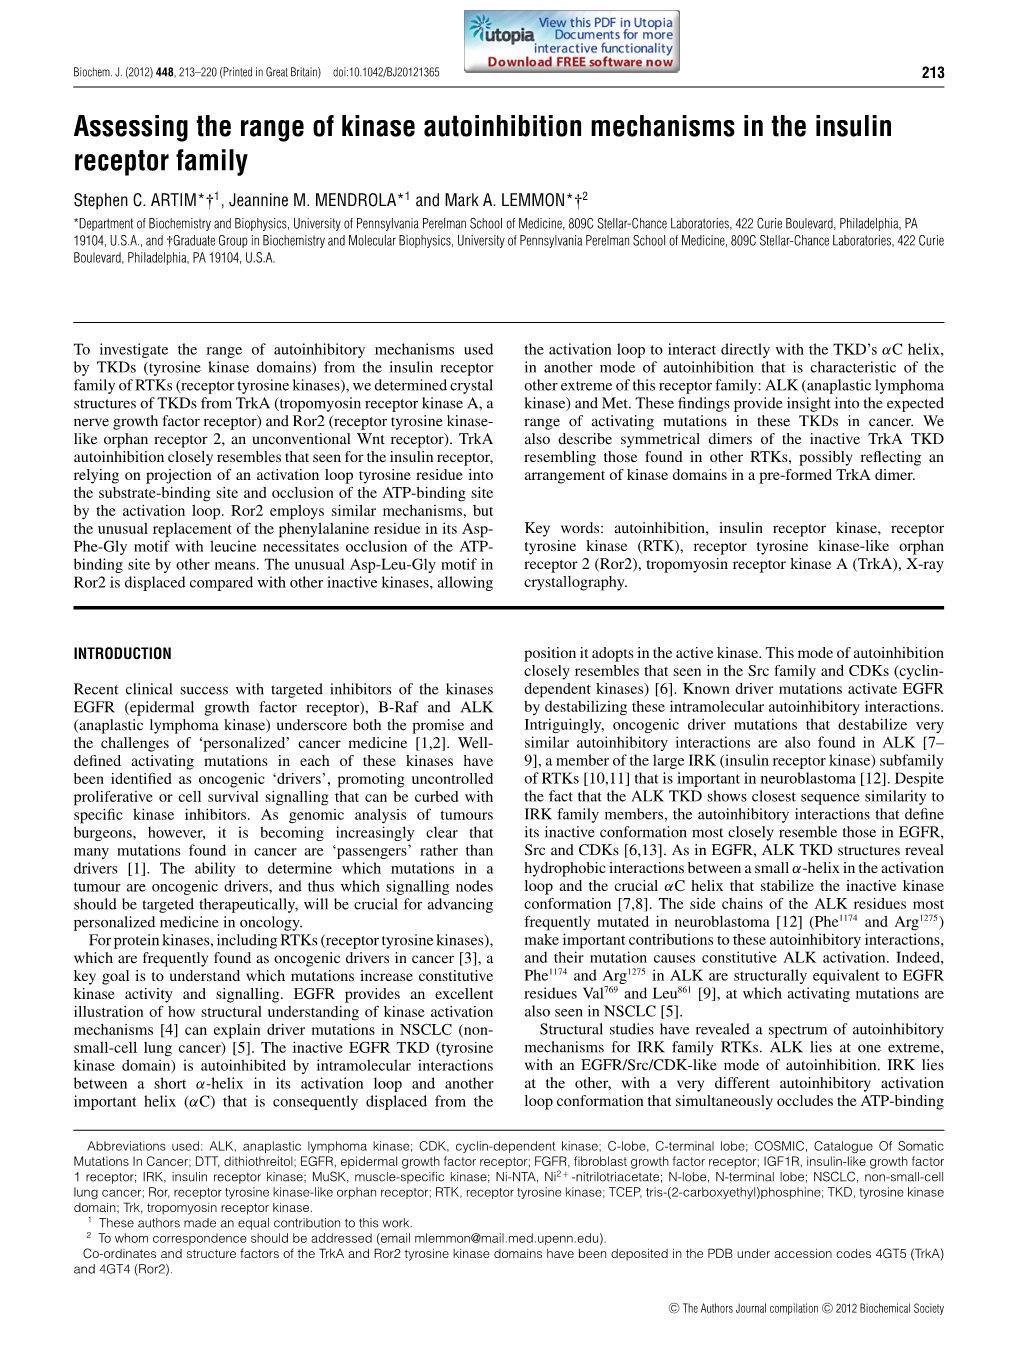 Assessing the Range of Kinase Autoinhibition Mechanisms in the Insulin Receptor Family Stephen C